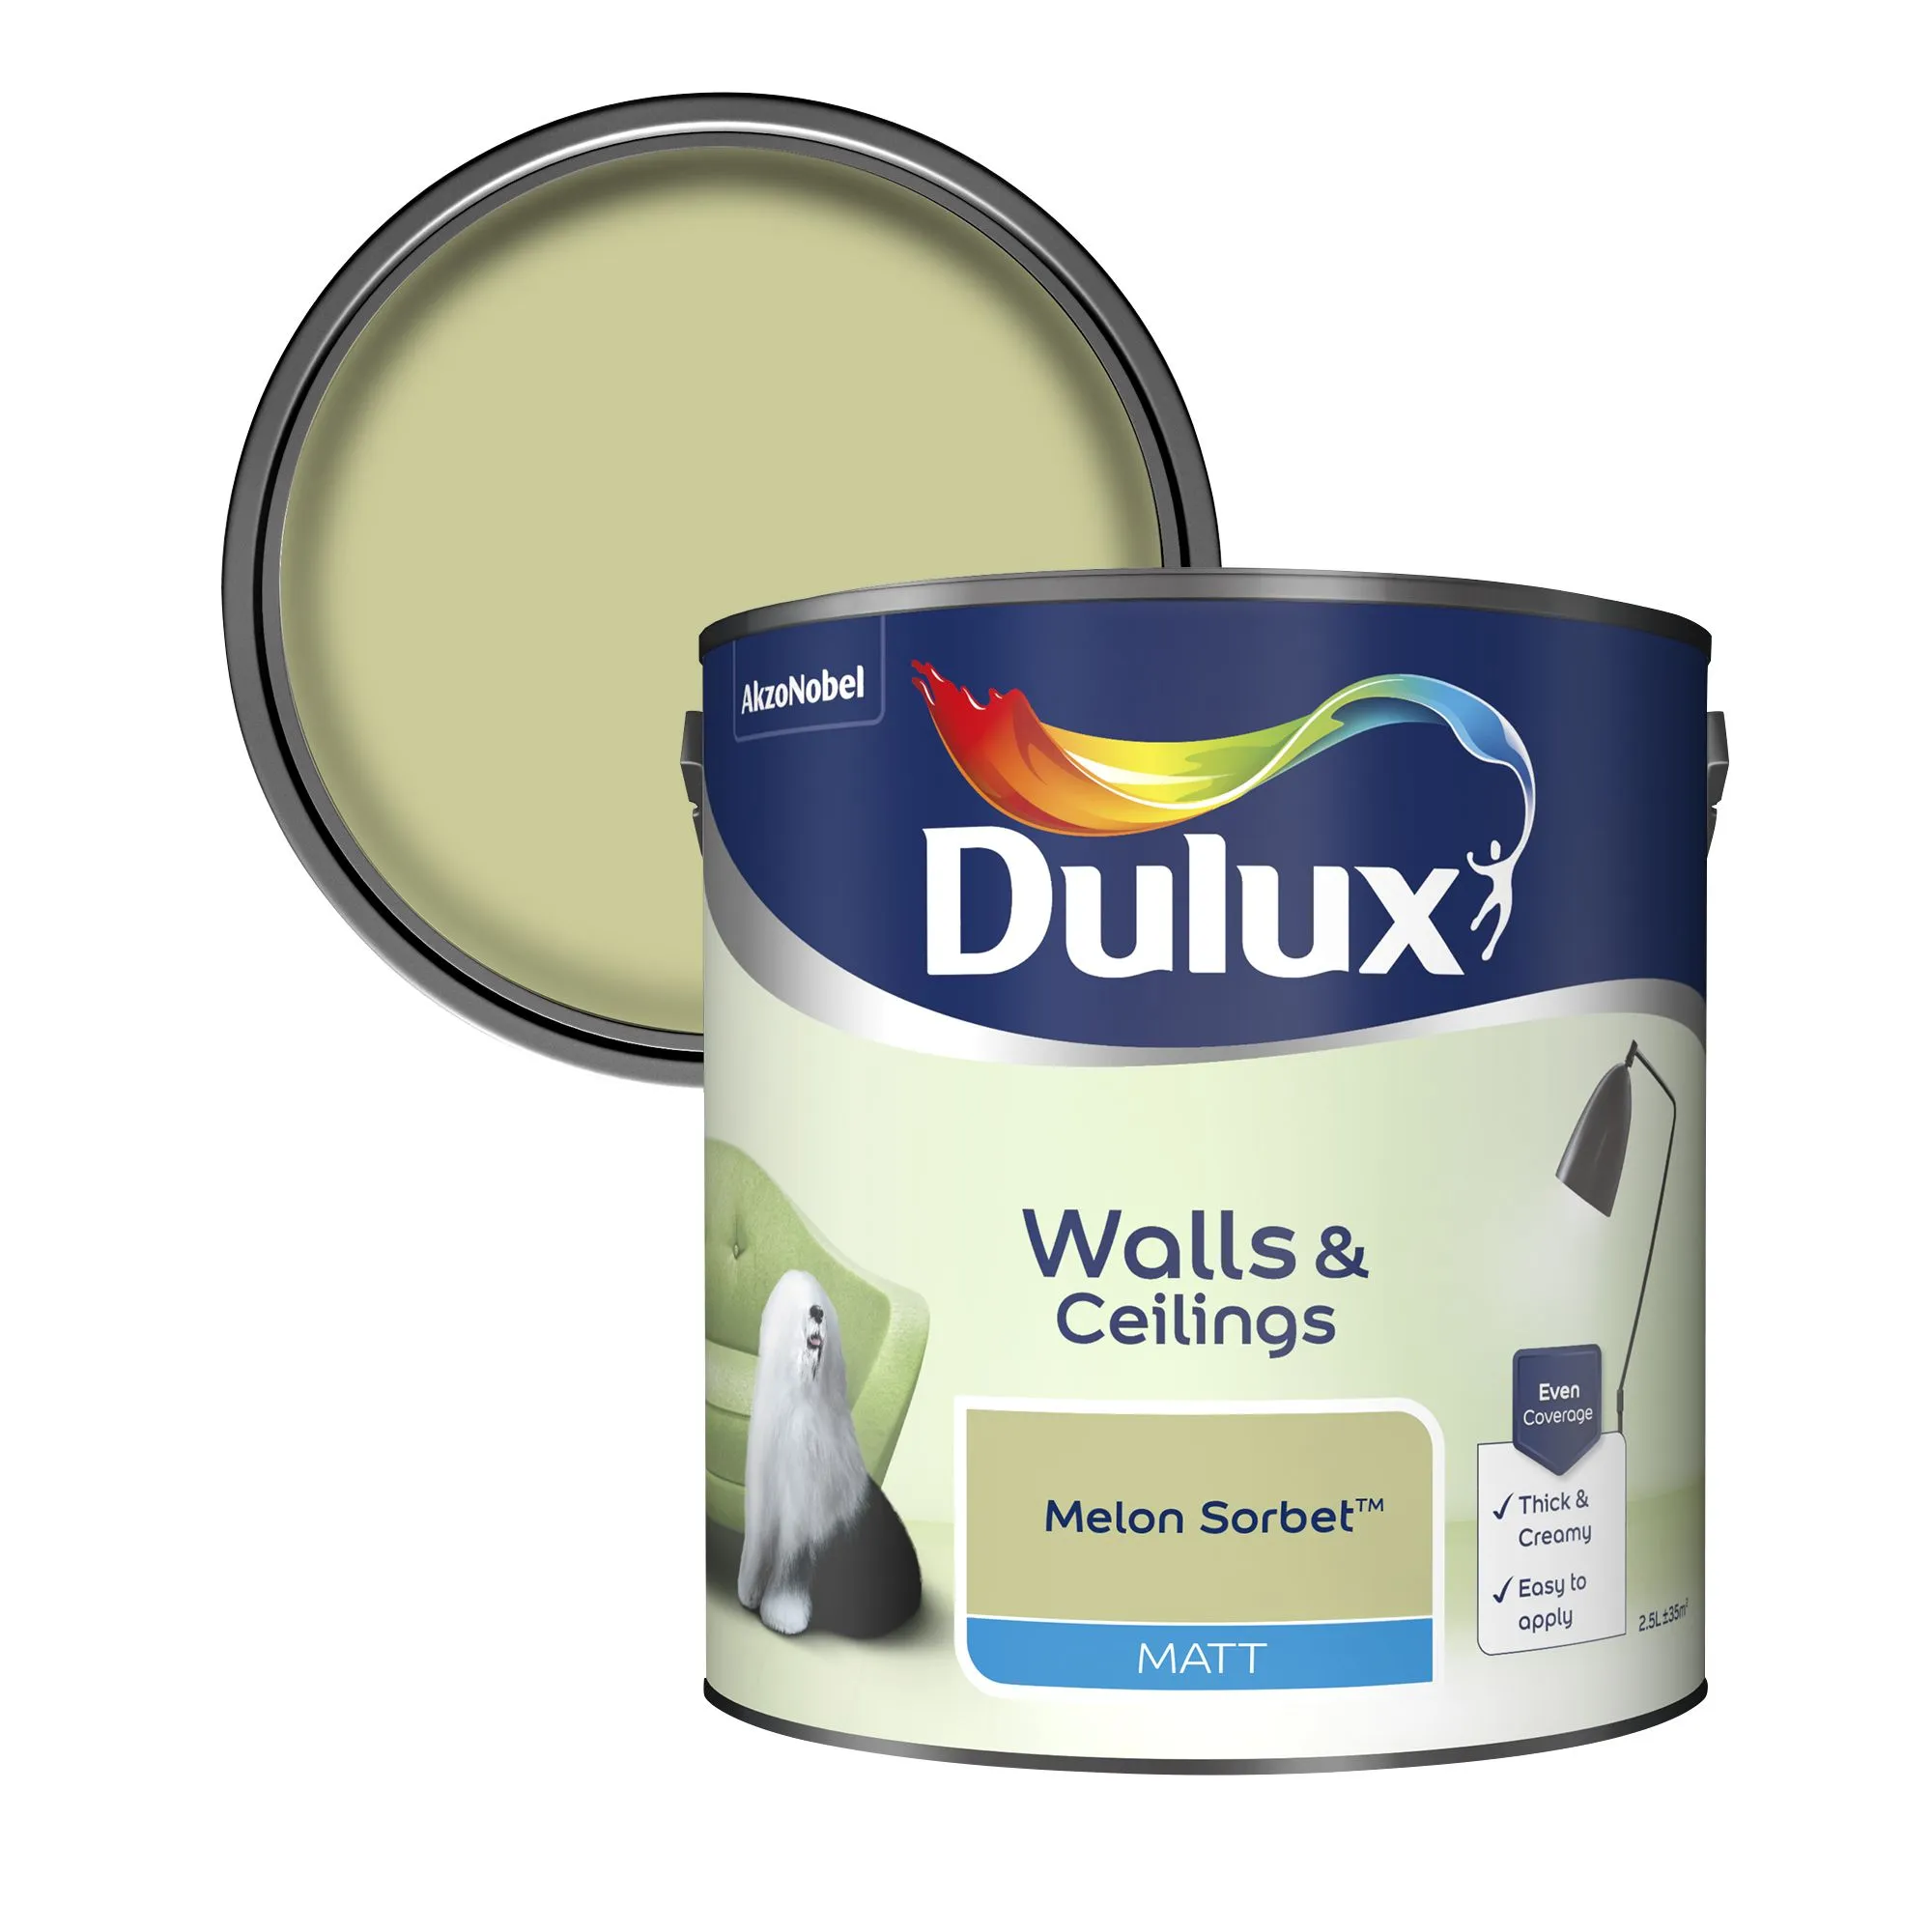 Dulux Standard Melon sorbet Matt Emulsion paint, 2.5L